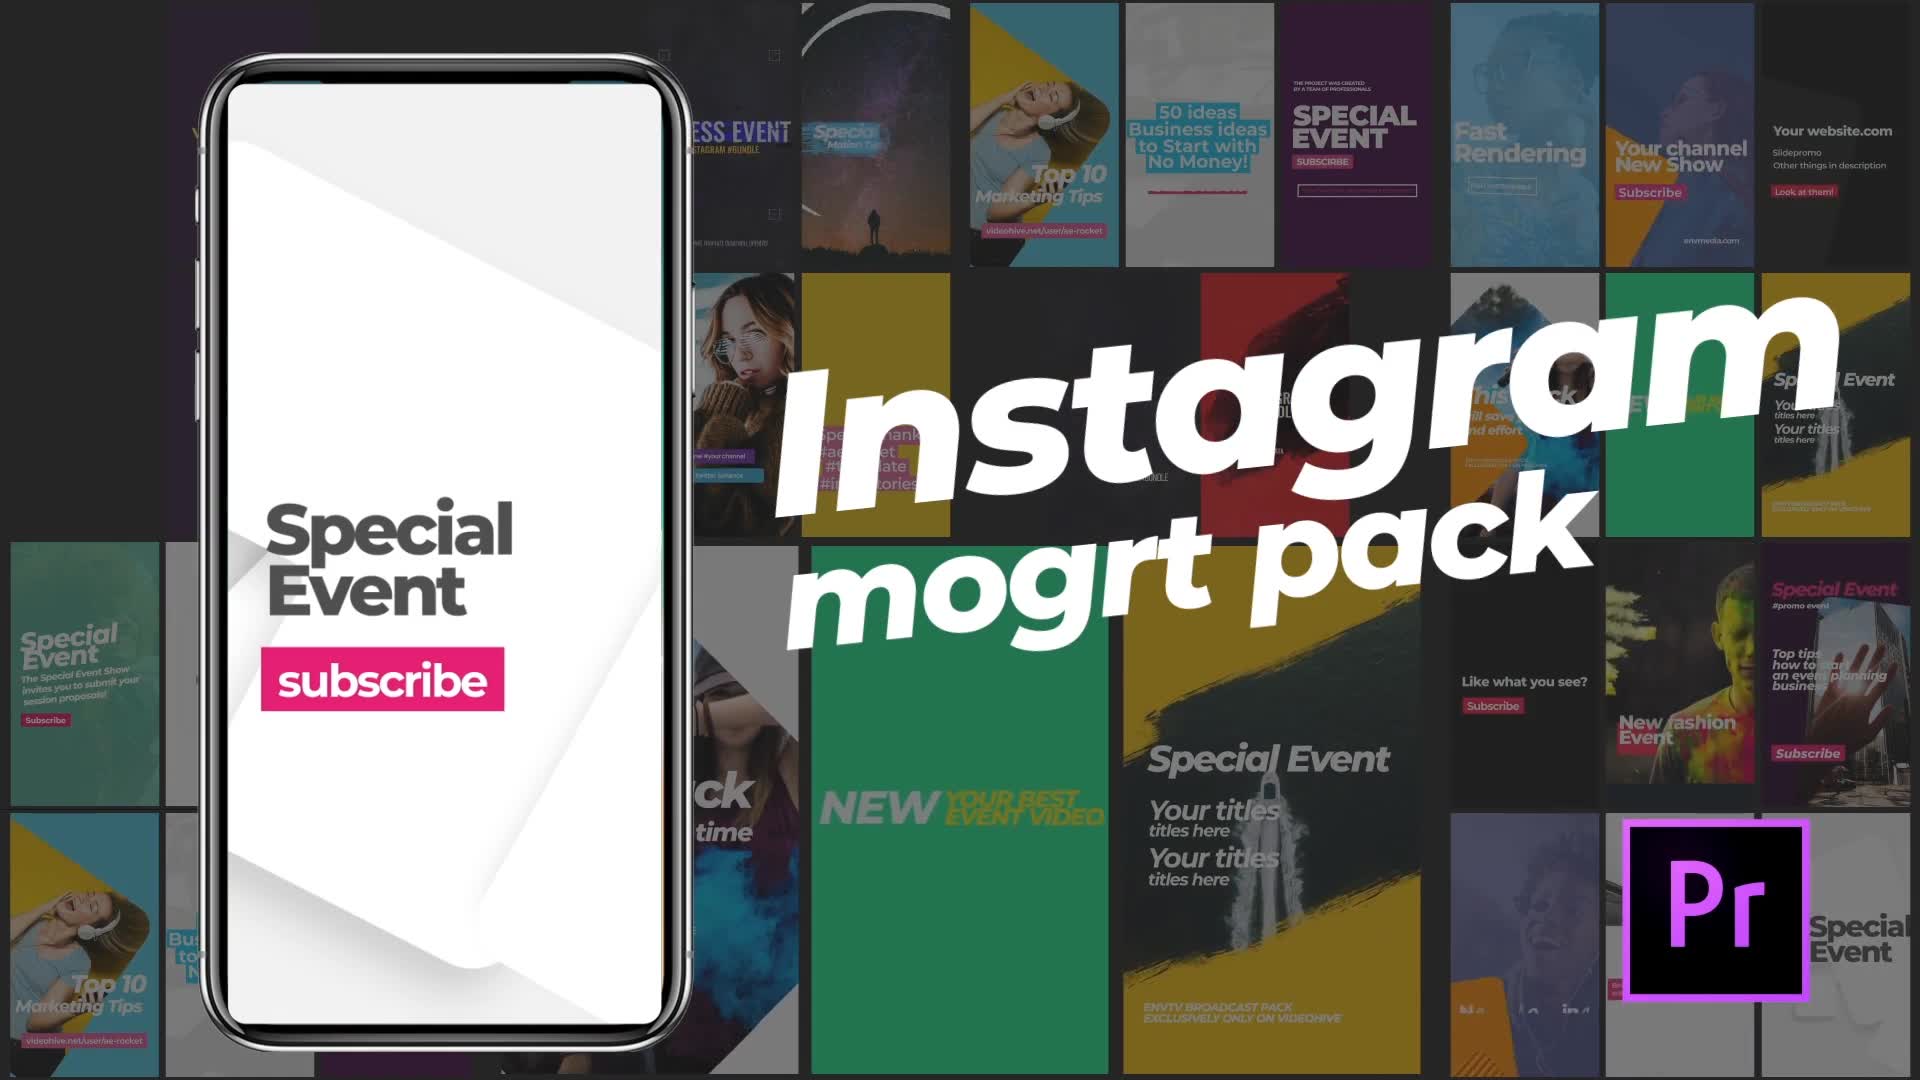 Instagram Promo mogrt - Download Videohive 22143877